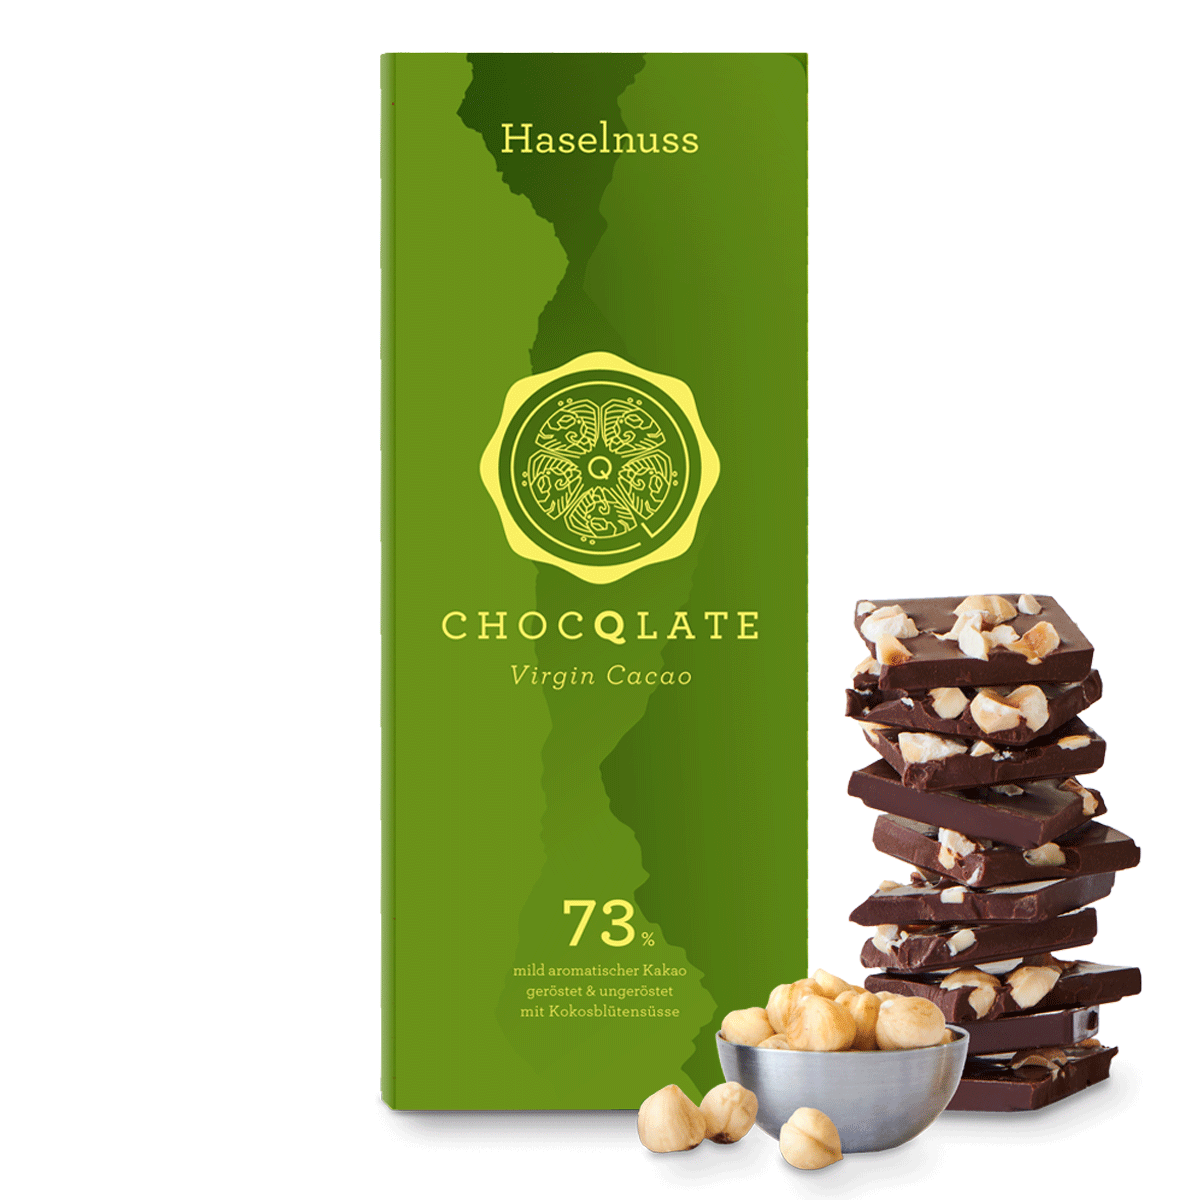 CHOCQLATE organic chocolate hazelnut with virgin cocoa